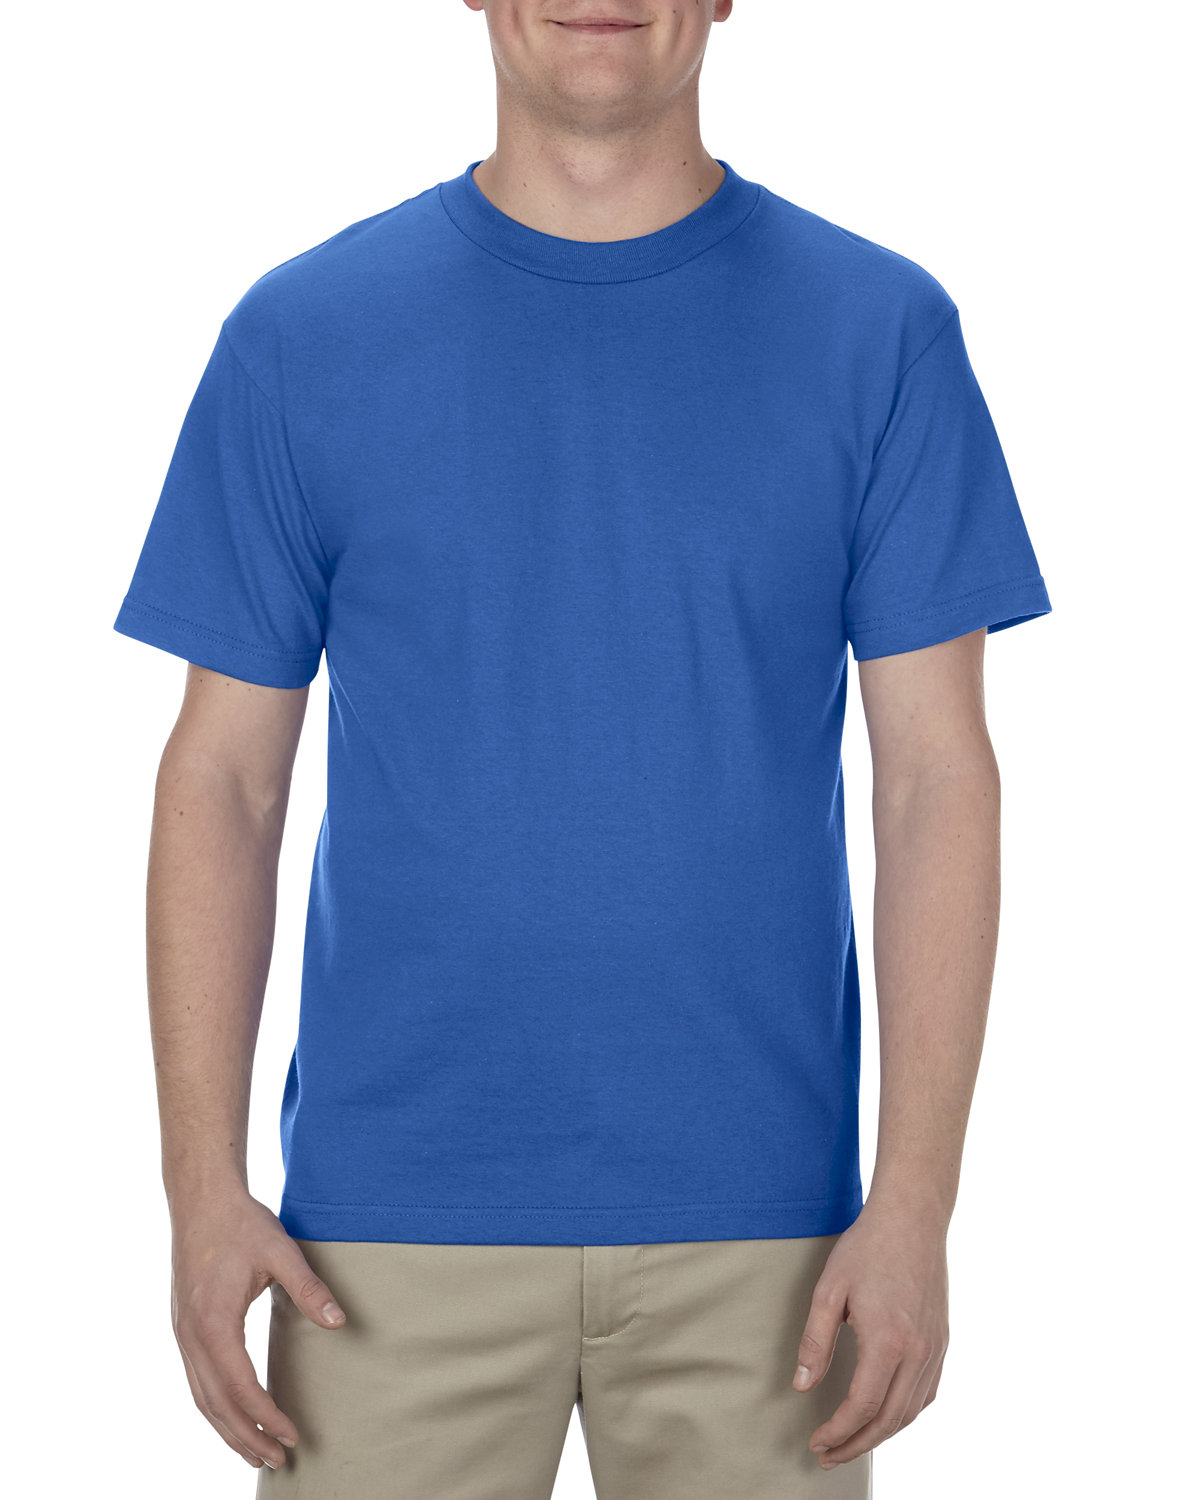 American Apparel Unisex Heavyweight Cotton T-Shirt royal blue 